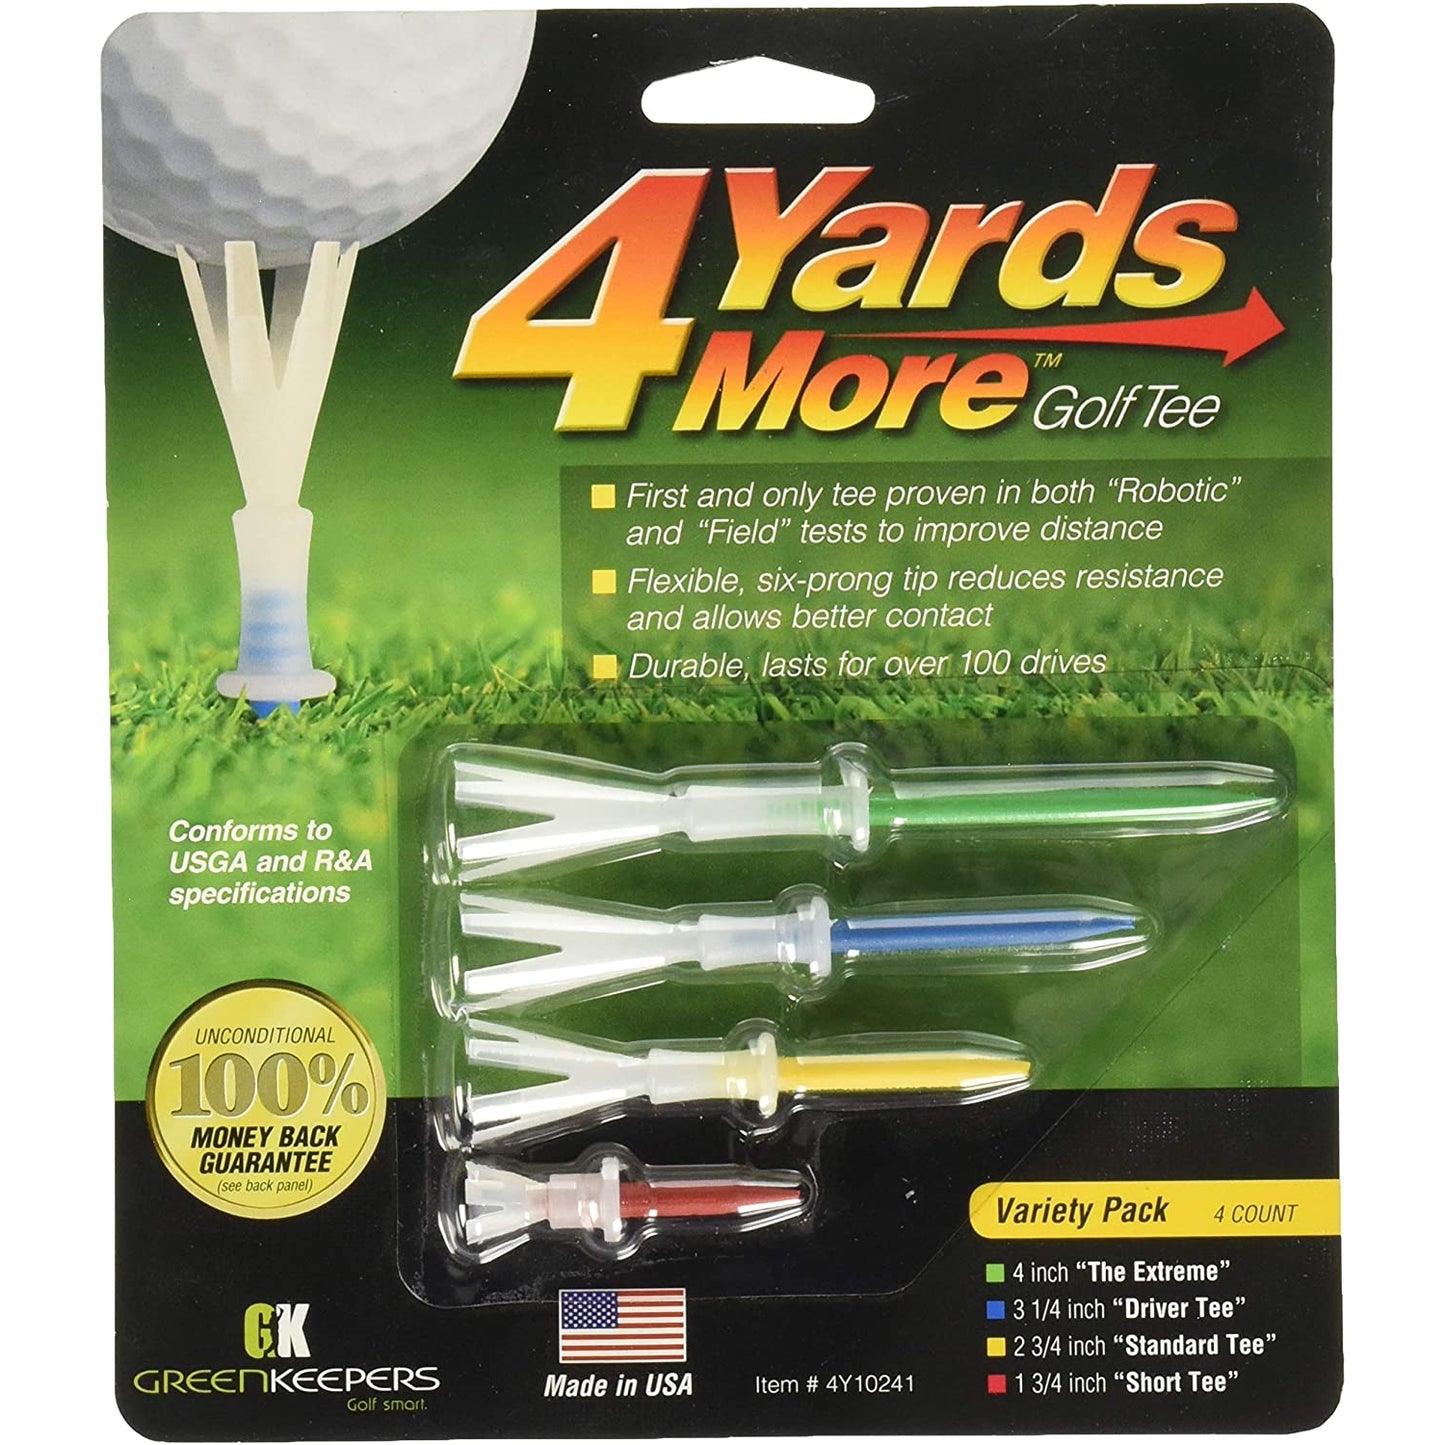 4 Yards More Golf Tee - Variety pack